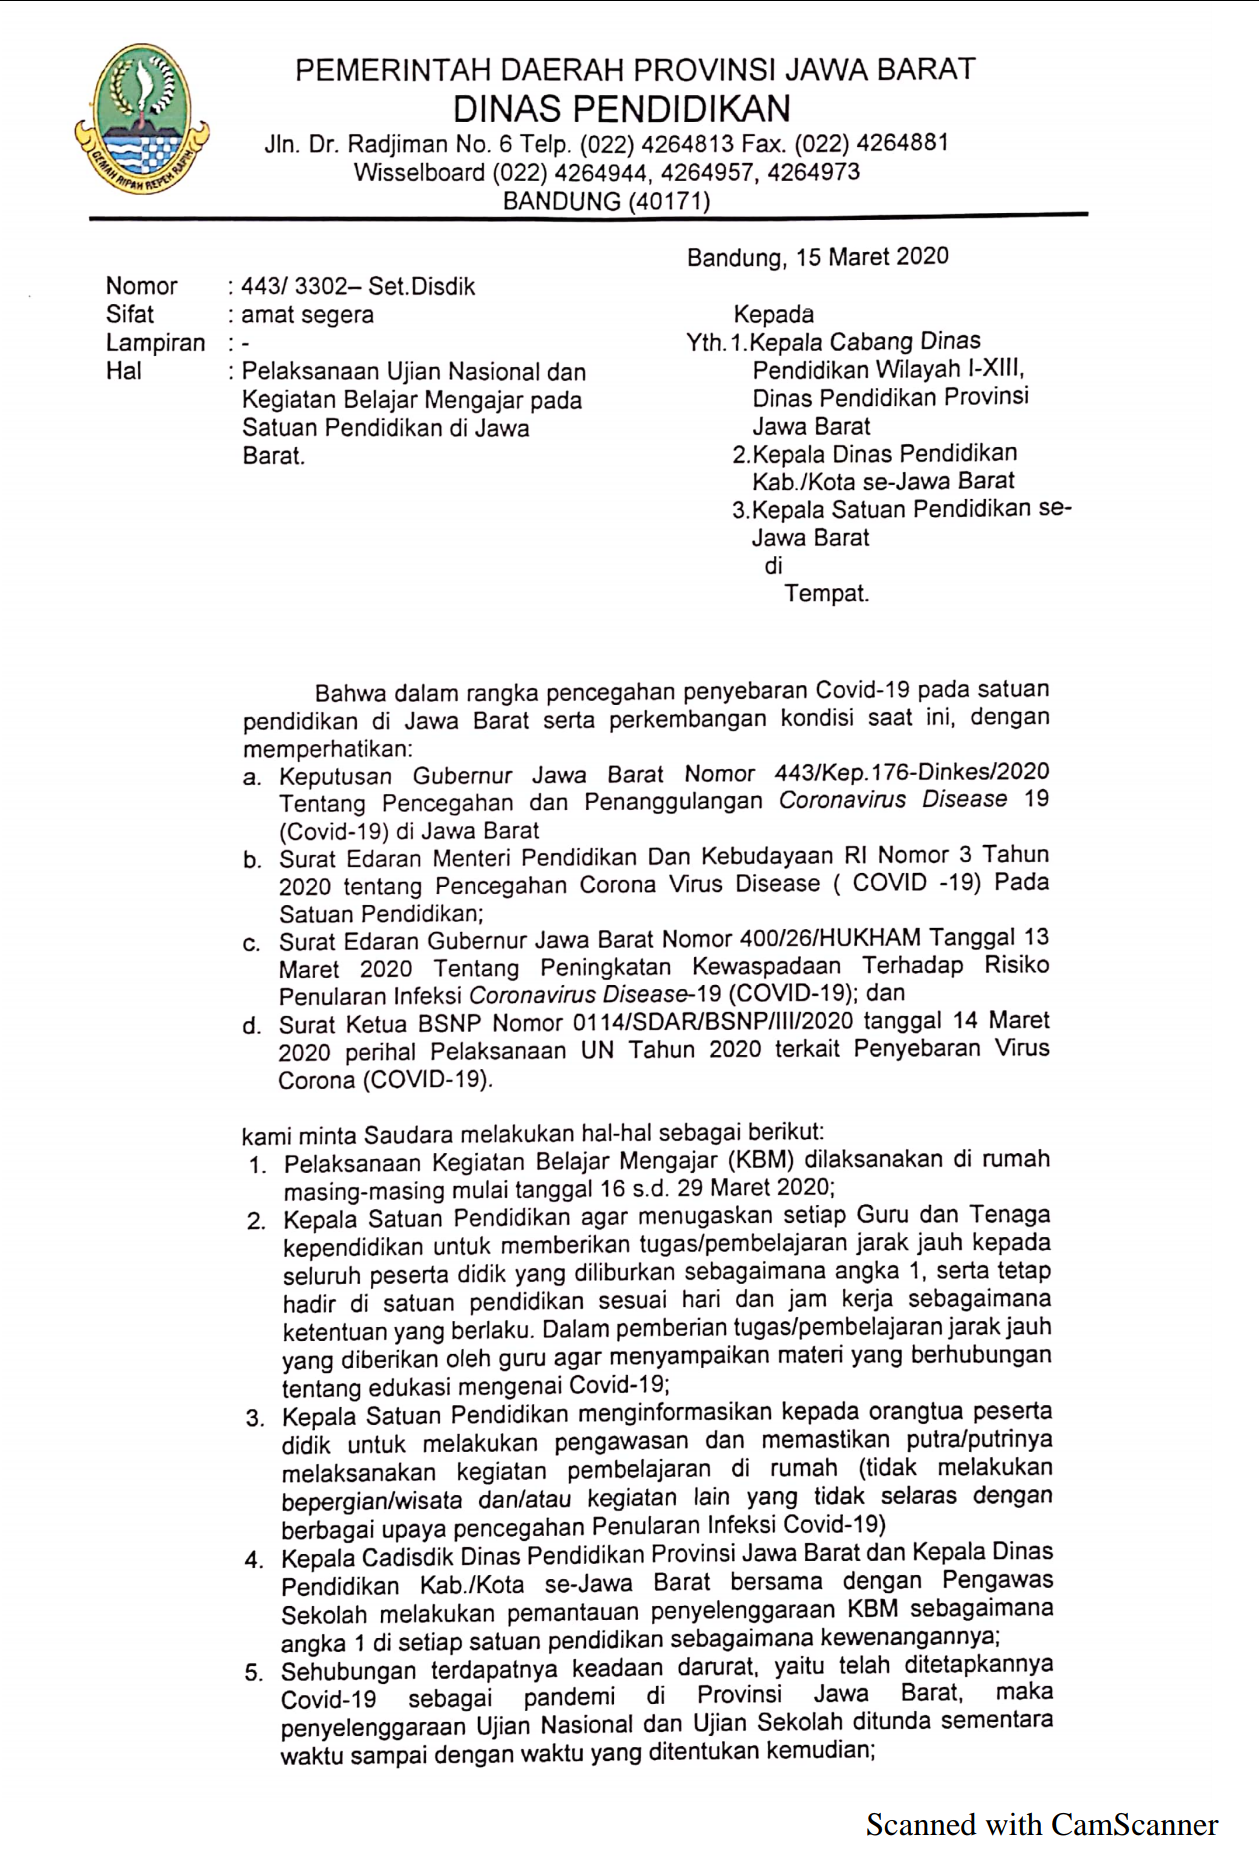 Edaran Dinas Pendidikan Provinsi Jawa Barat :Penghentian Aktifitas KBM sementara